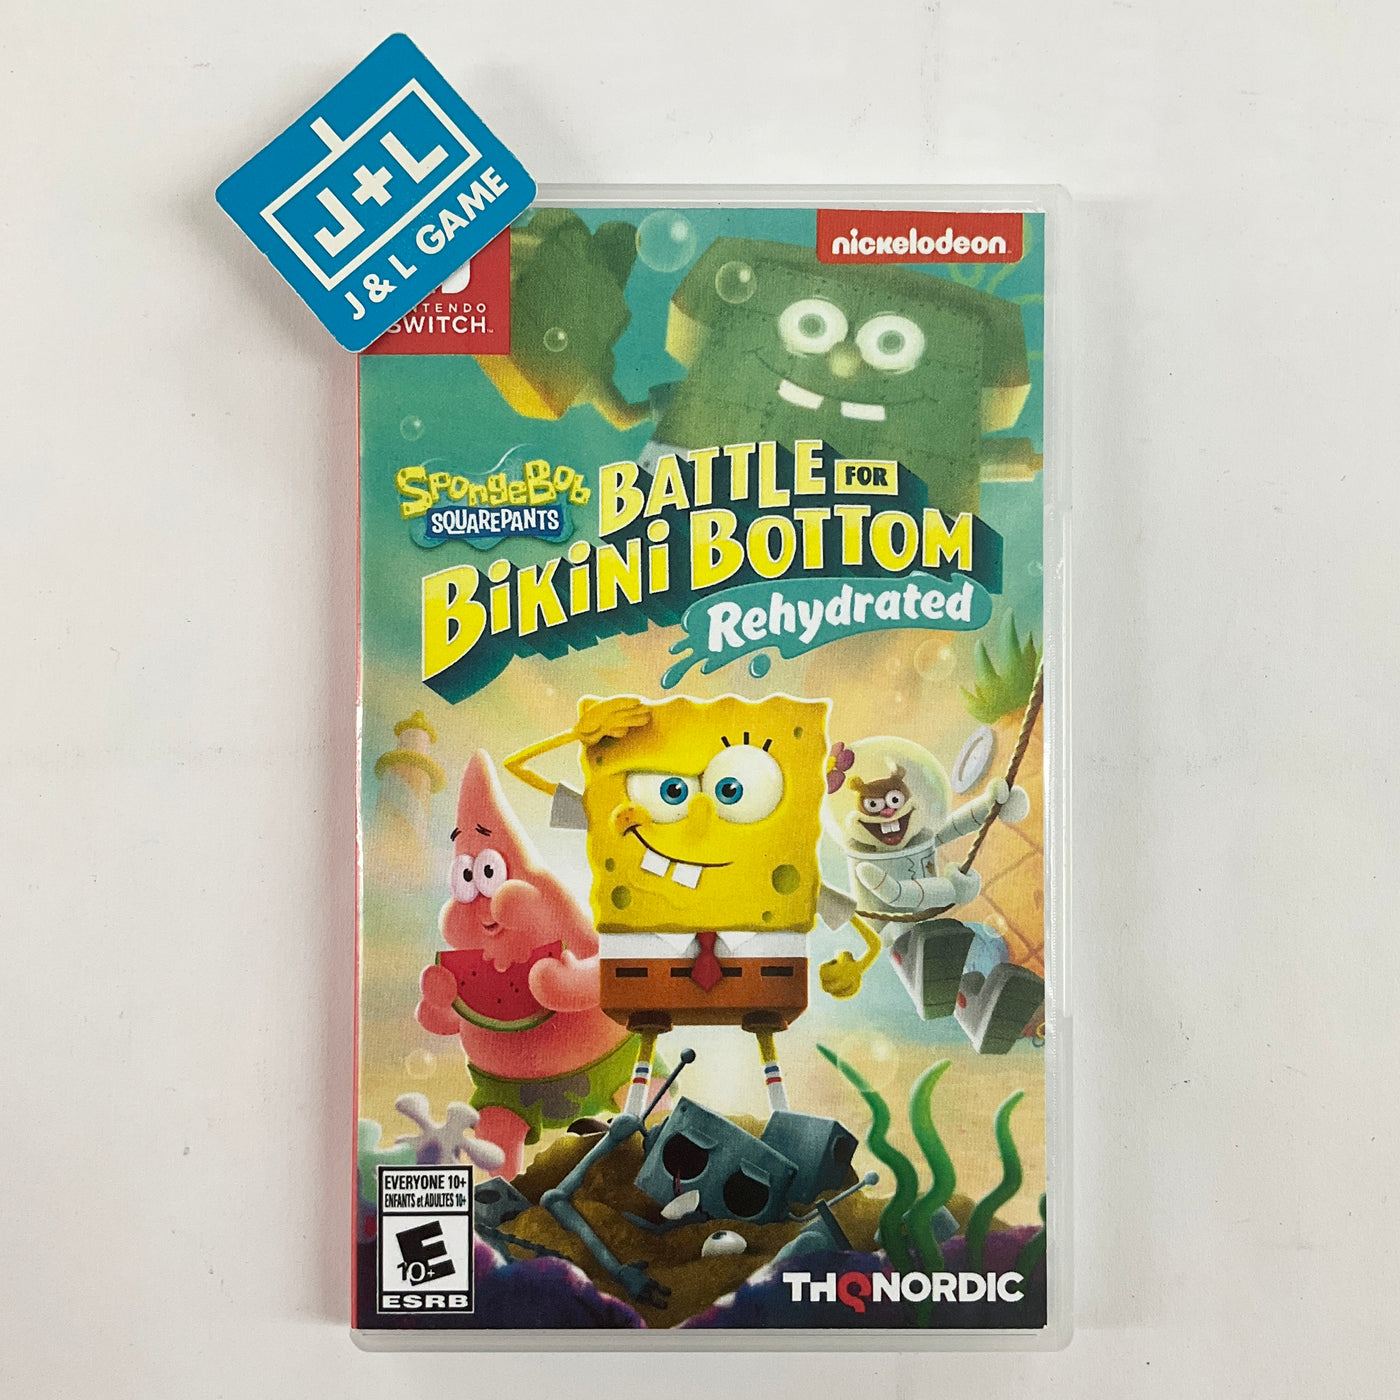 Battle - Squarepants: Spongebob | Bottom J&L Rehydrated N Bikini - (NSW) Game for